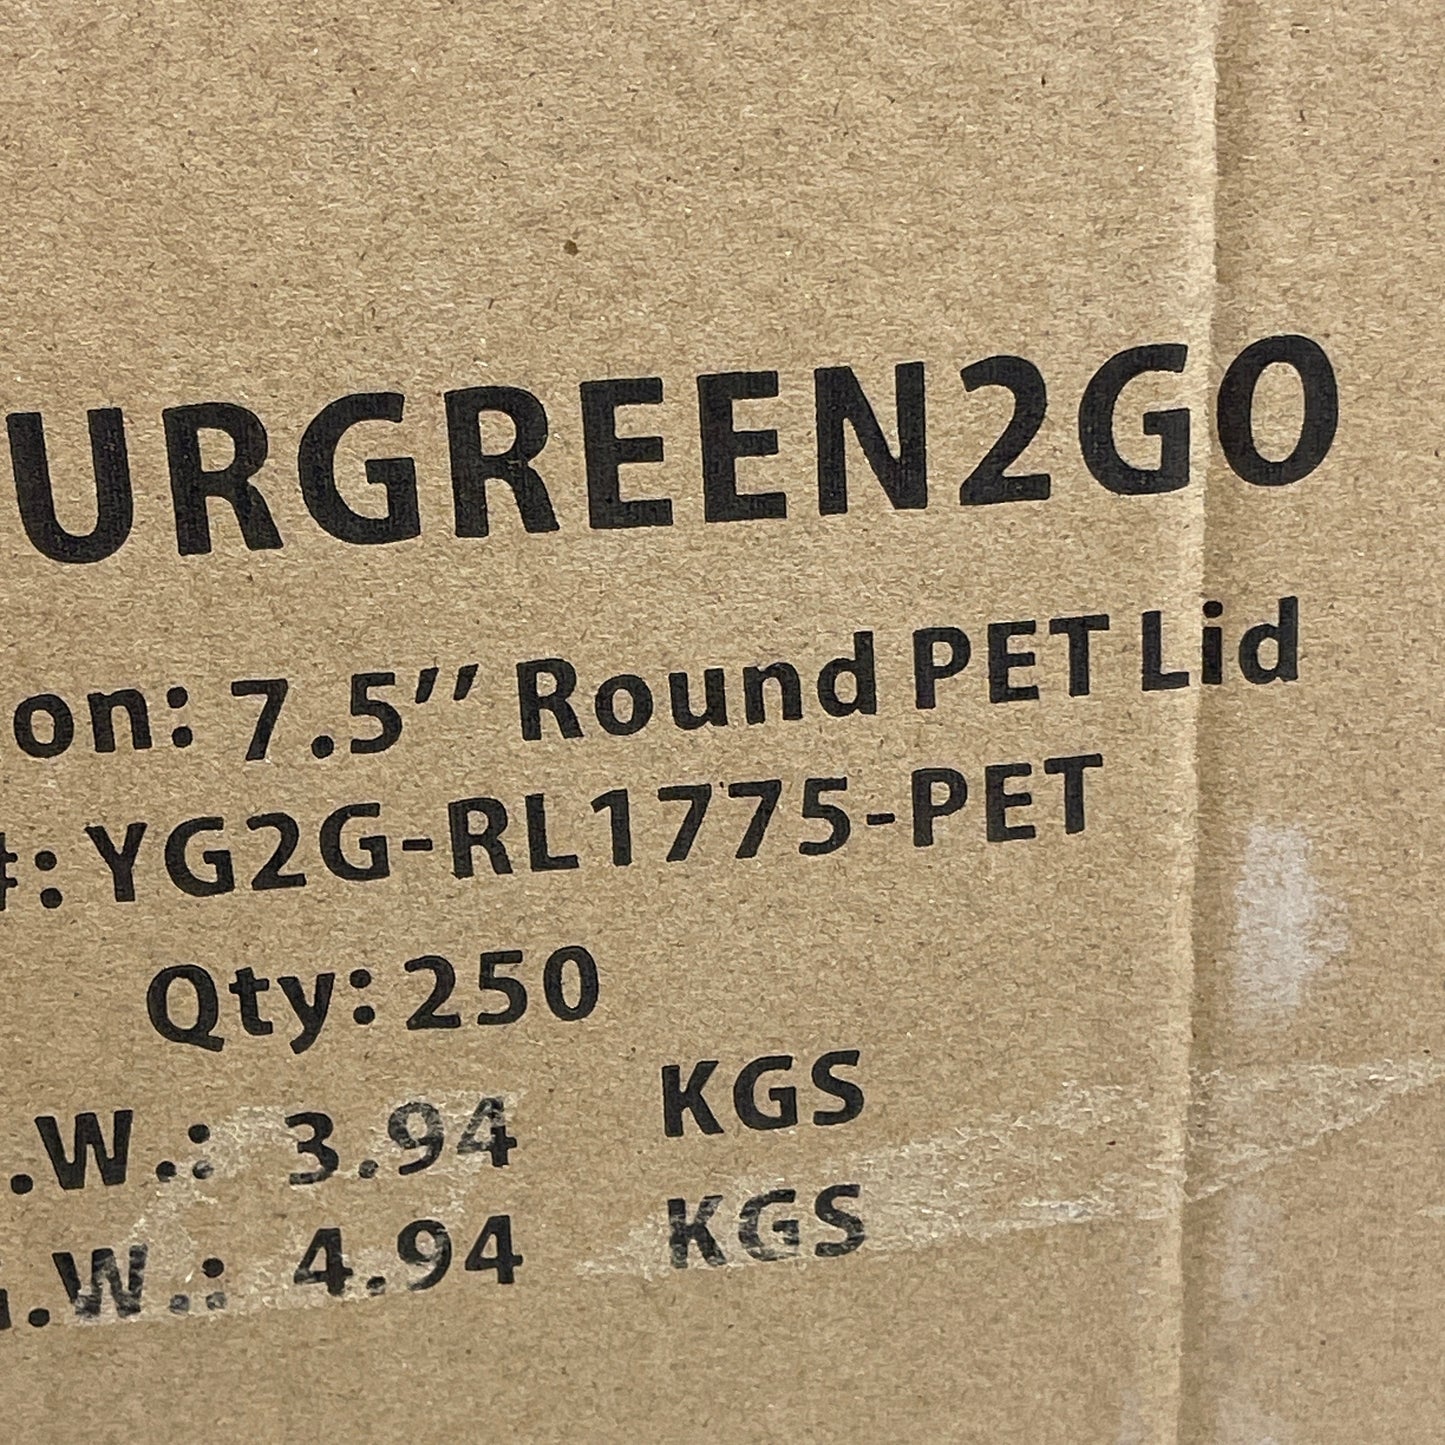 ZA@ YOURGREEN2GO PET (250 LIDS) Plastic Lids 7.5" Round Clear YG2G-RL1775-PET H